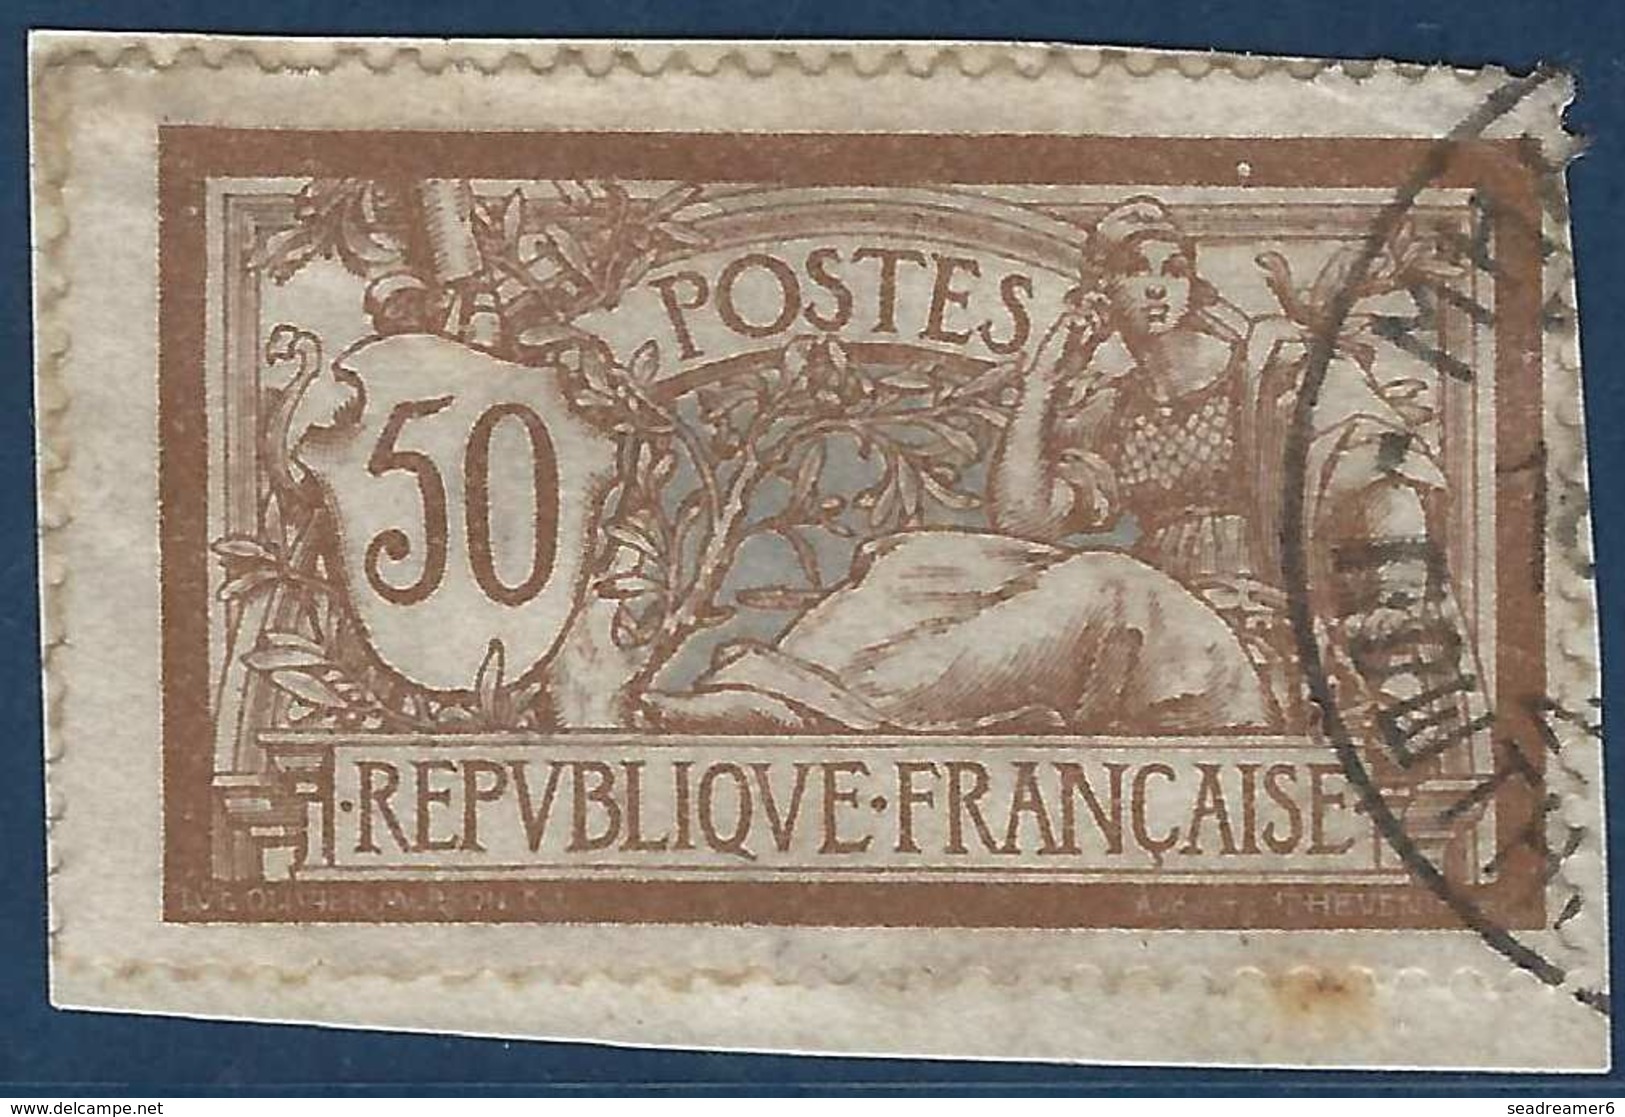 France Postes Serbes N° 13 50c Merson N°120 Obliteration Serbe R - War Stamps